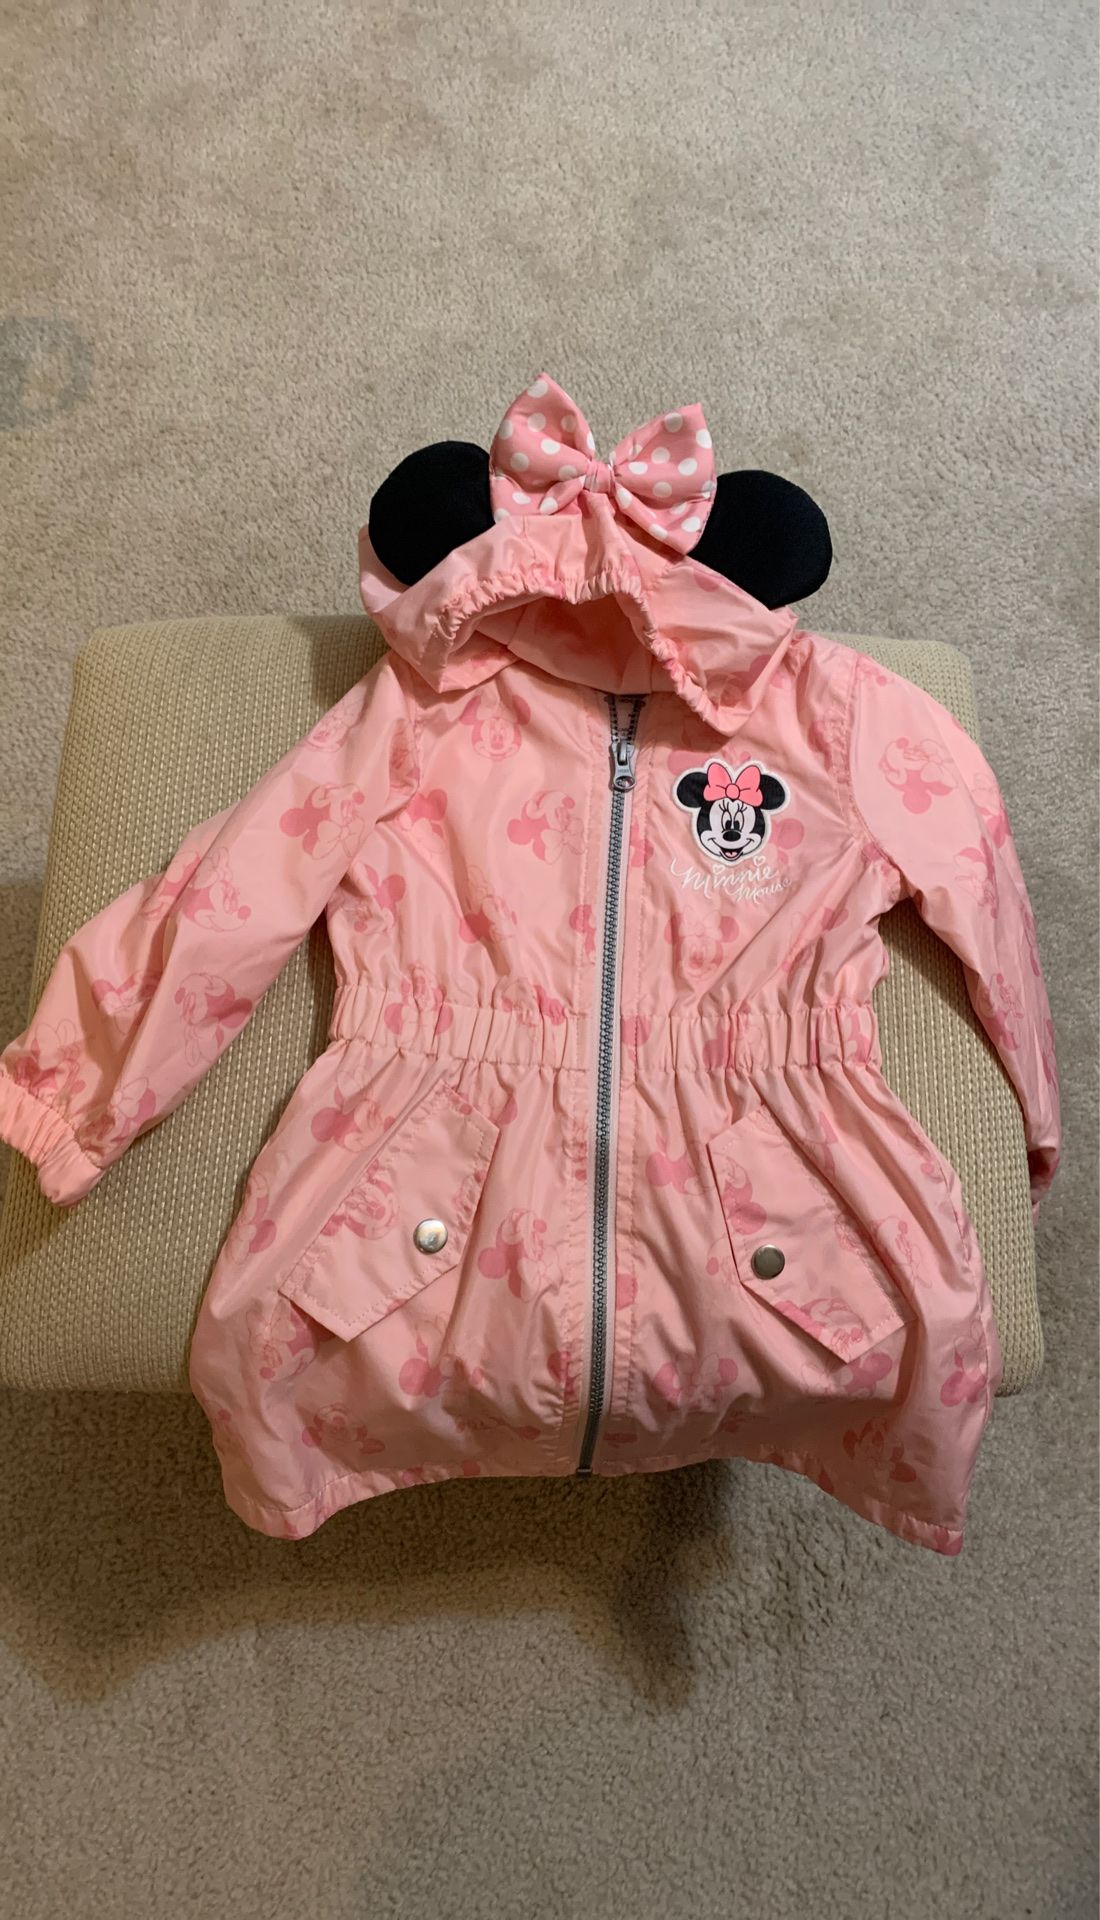 Minnie Mouse light jacket